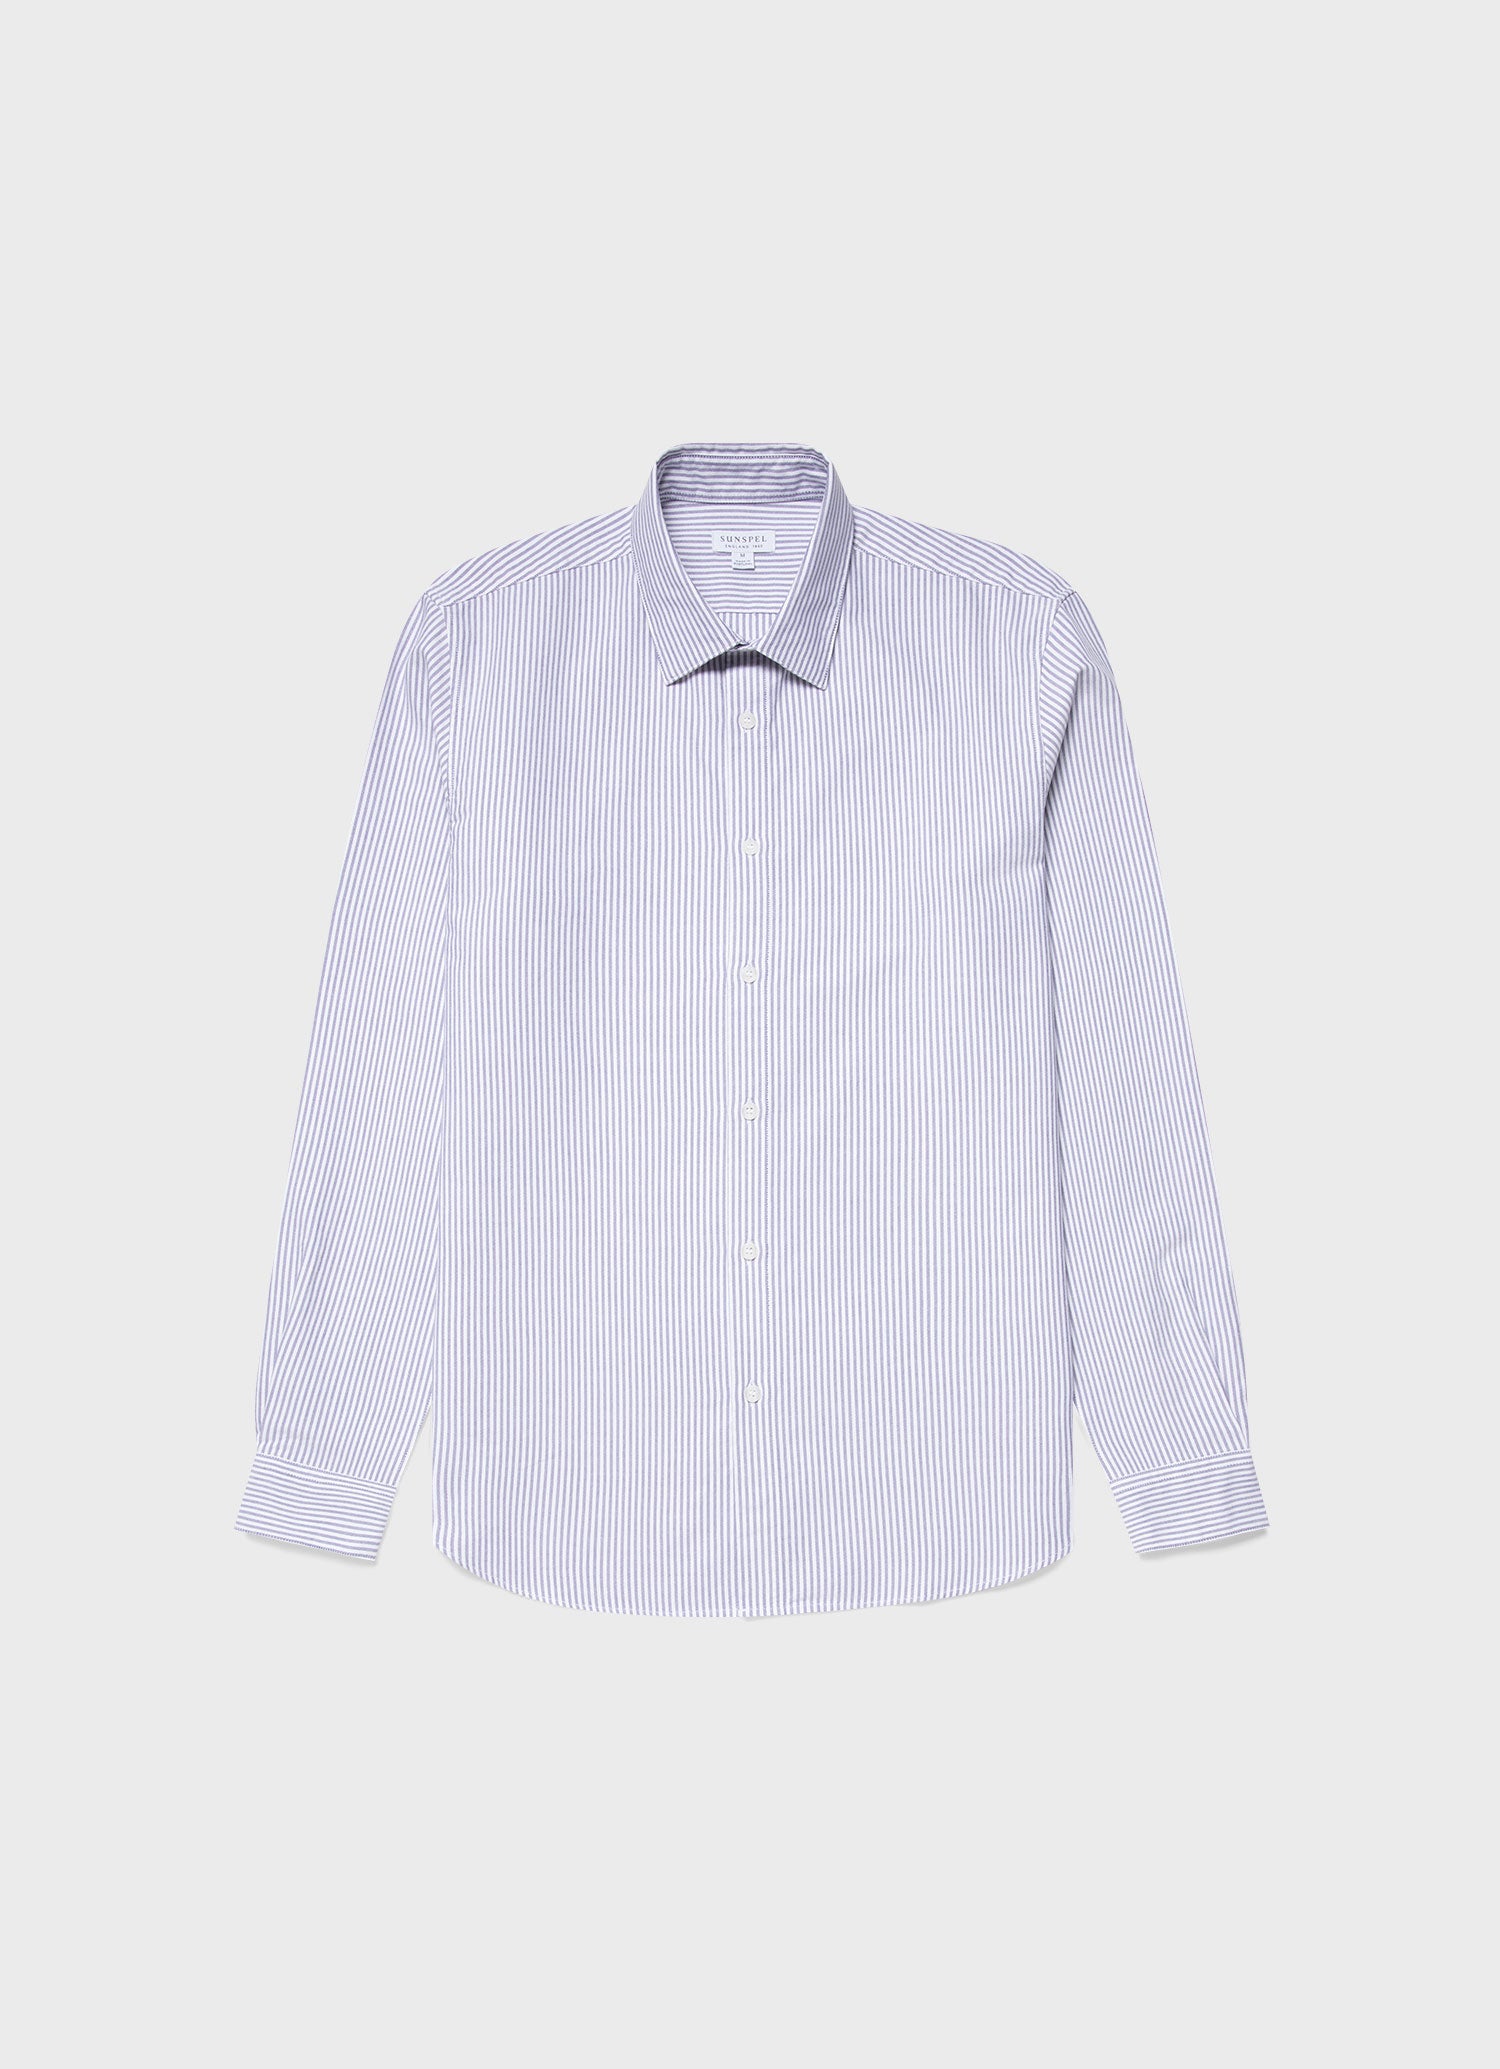 Men's Oxford Shirt in White/Navy Oxford Stripe | Sunspel